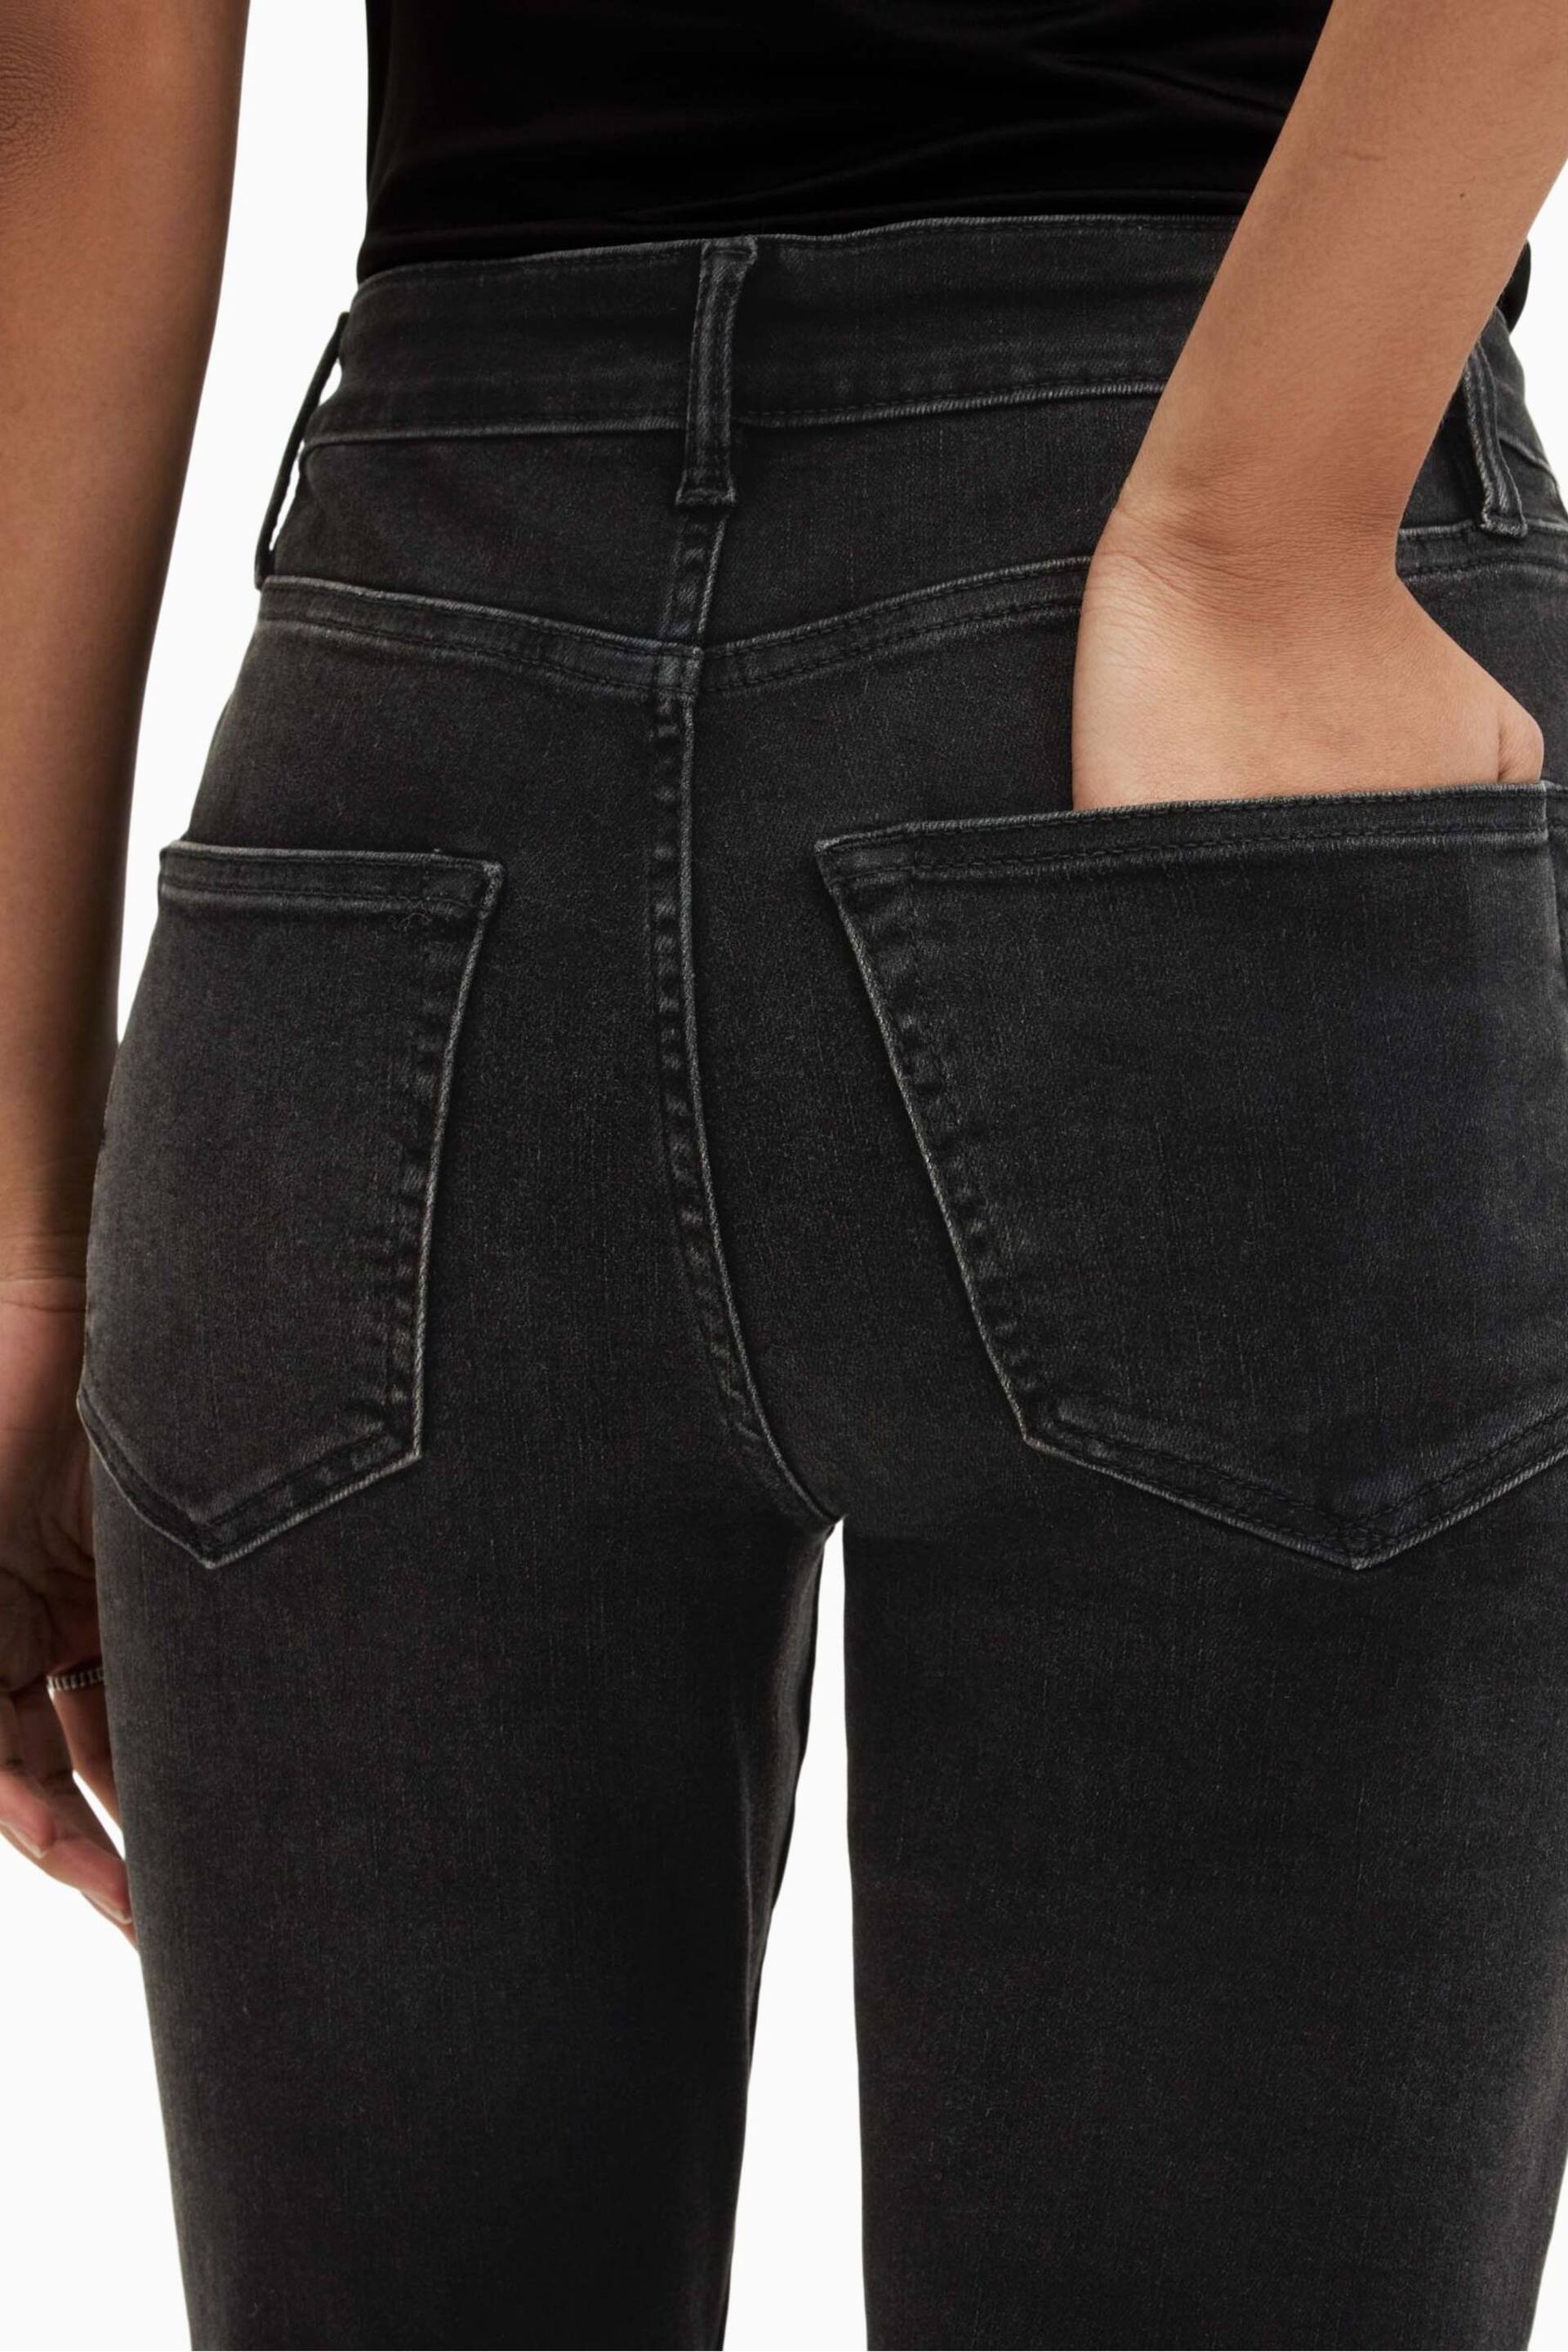 AllSaints Black Dax Vanta Sizeme Jeans - Image 6 of 7